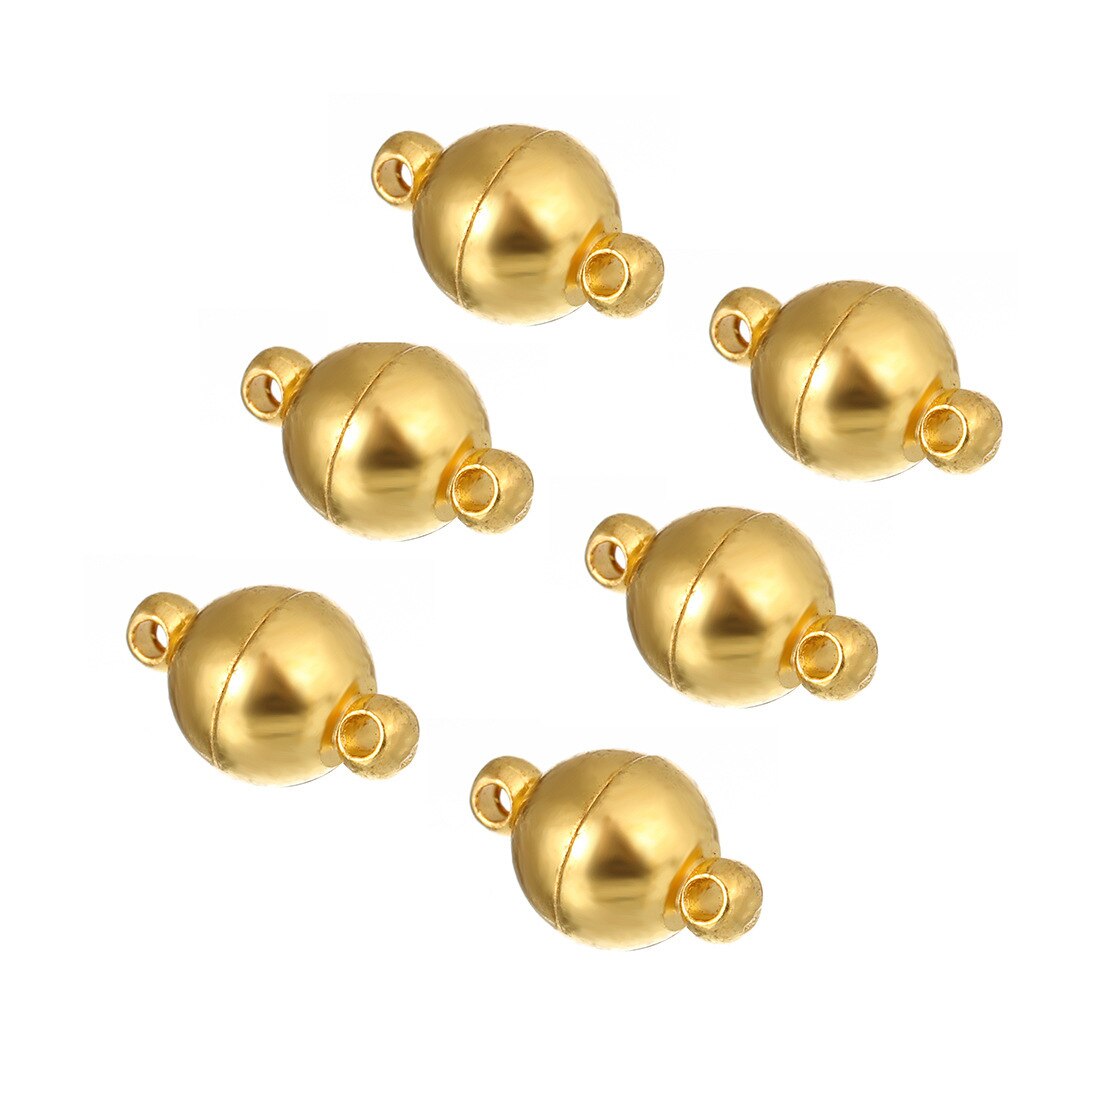 5pcs/lot DIY Jewelry Accessories Copper Color Retaining Ball Magnet Buckle Bracelet Necklace Connection Buckle Mask Connector